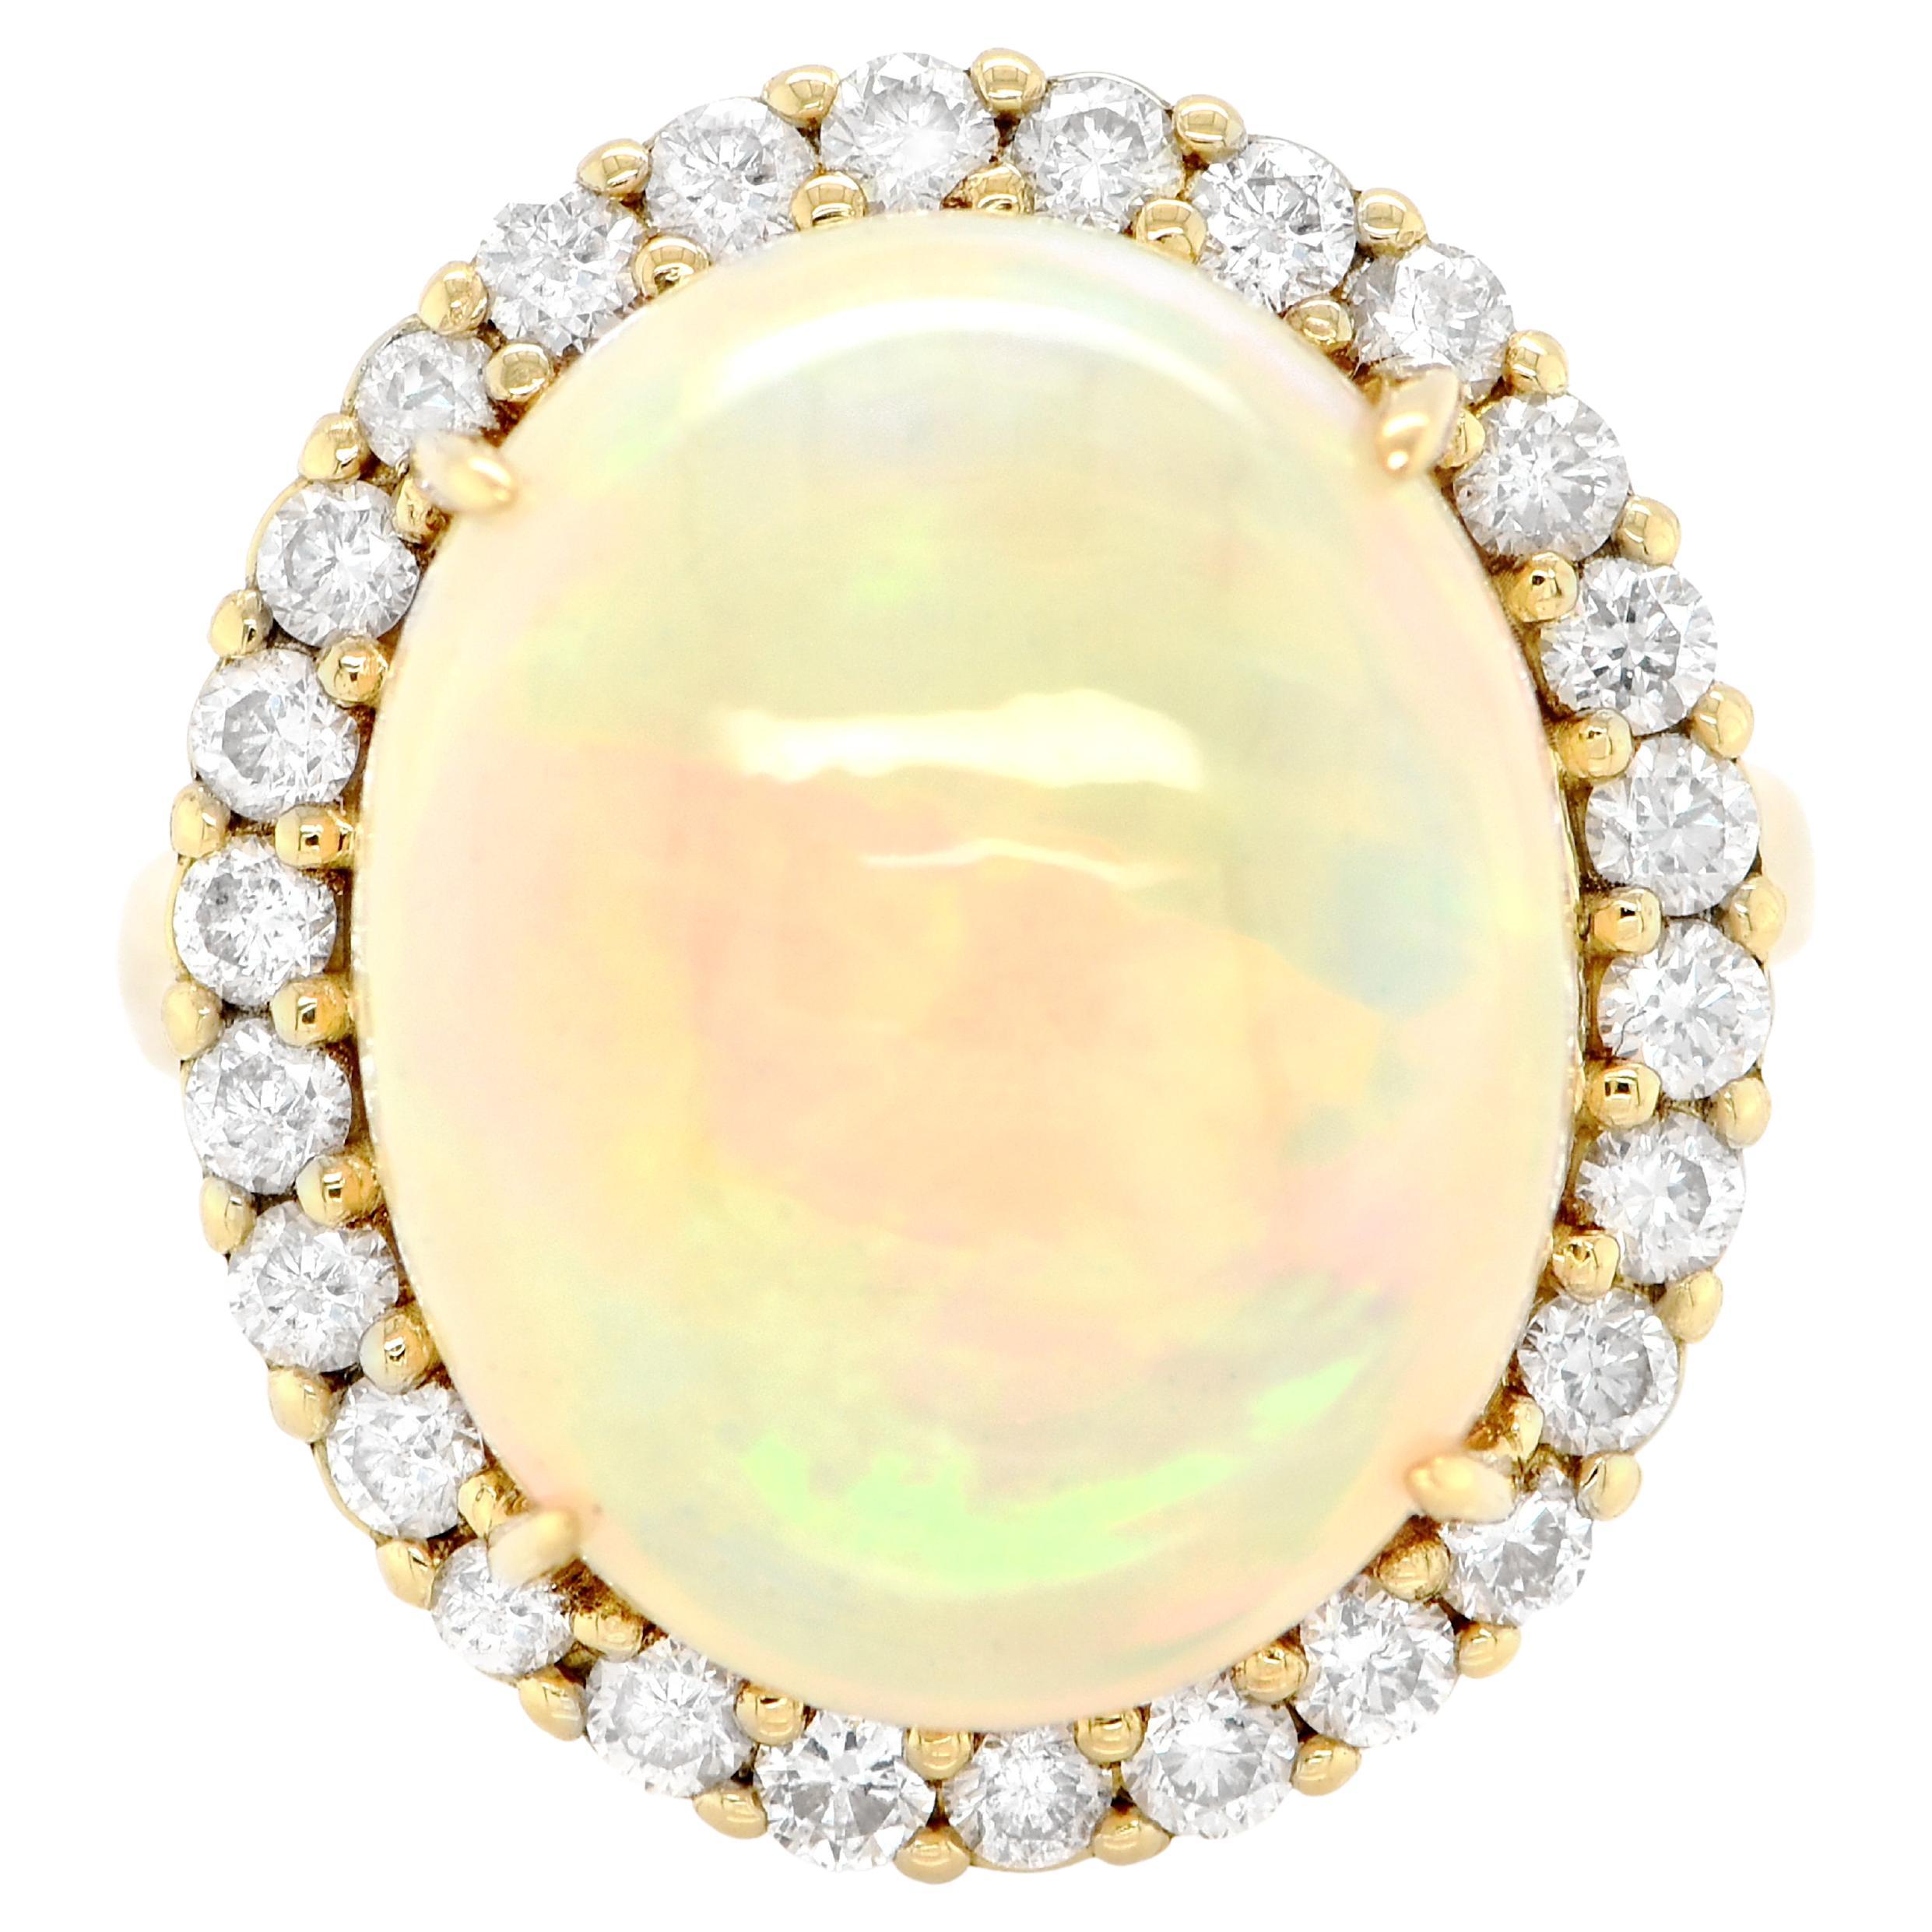 9.68 Carat Natural White, Ethiopian Opal and Diamond Ring Set in 18K Gold